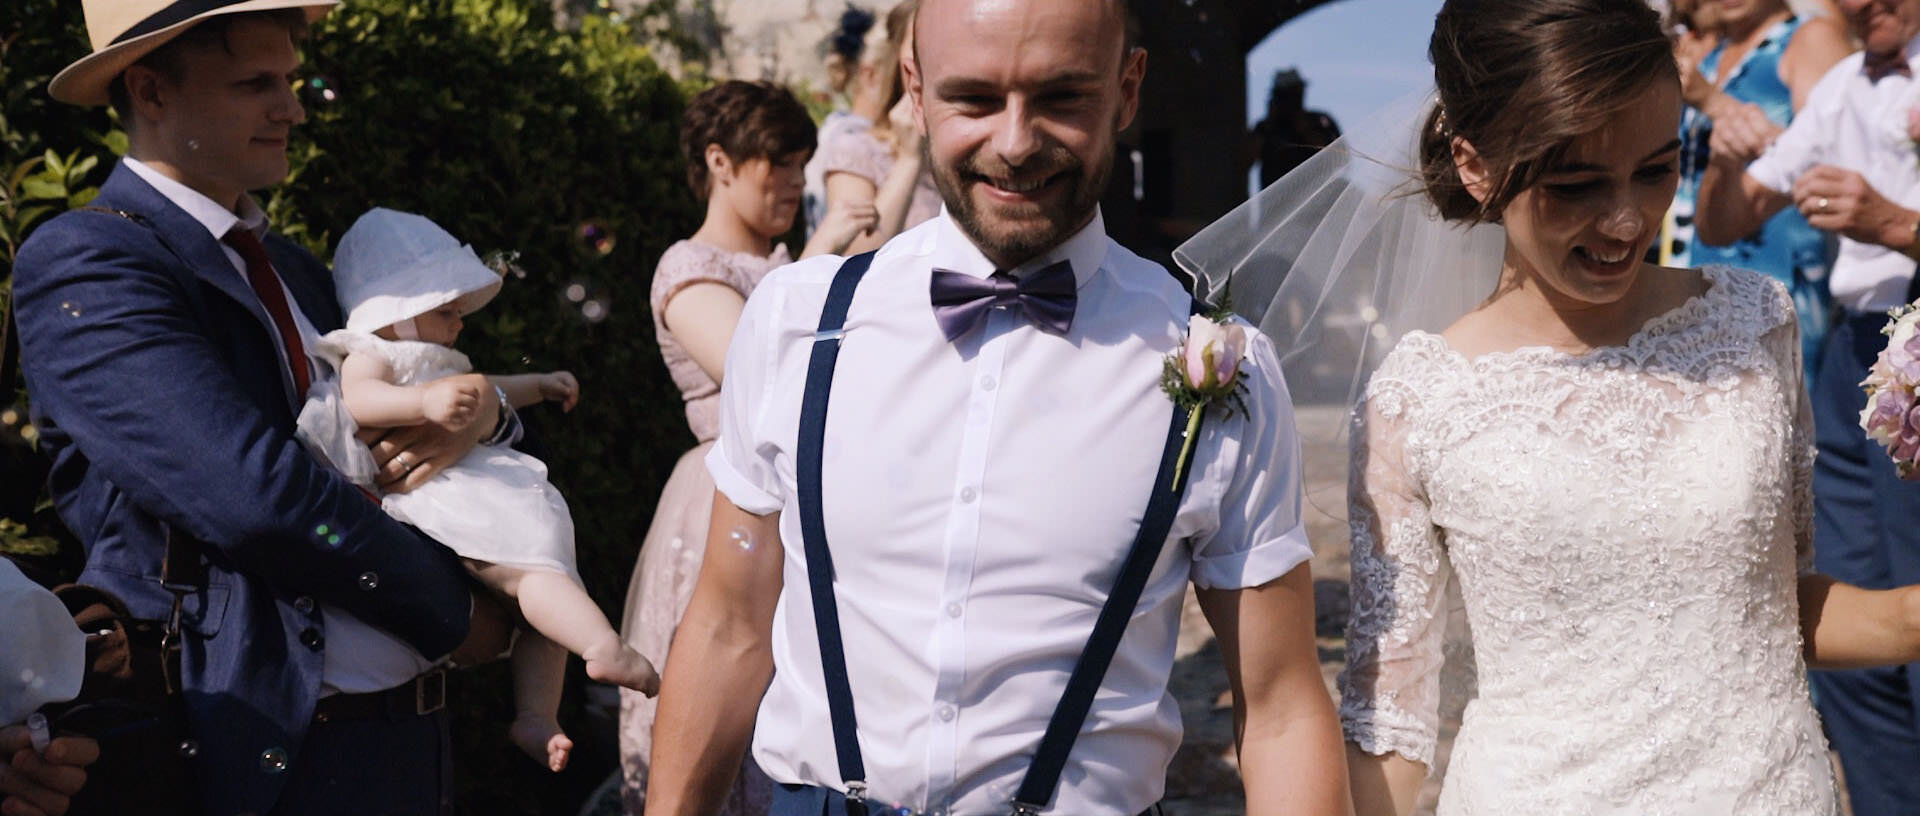 Lisa & Josh's Perfect Malcesine Wedding at Lake Garda 32.jpg